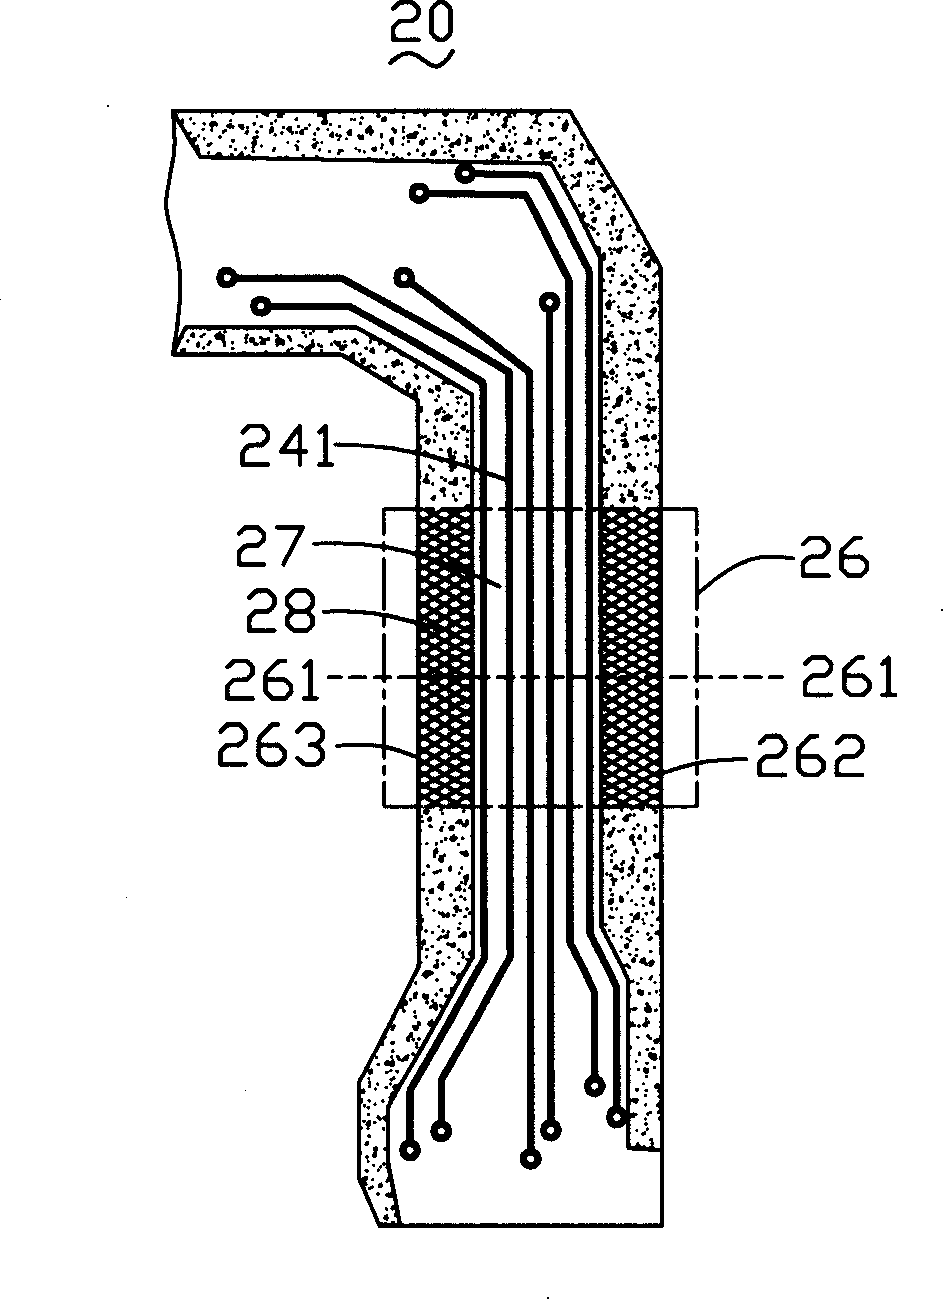 Flexible printing circuit board